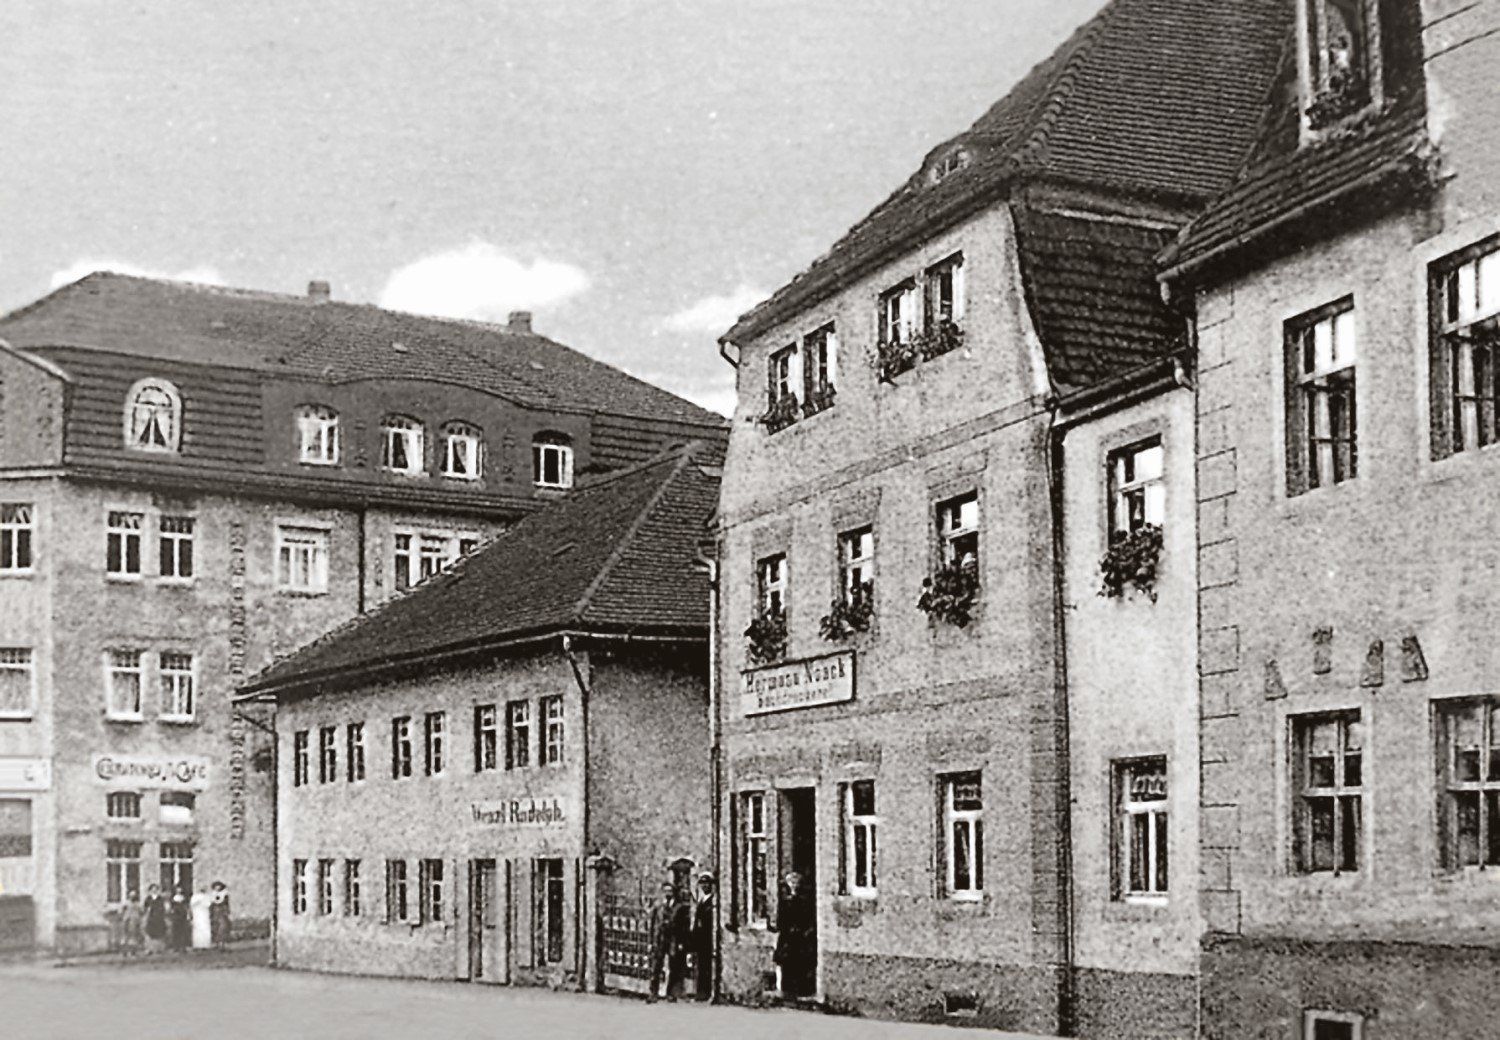 The first workshop of Ferdinand Adolph Lange